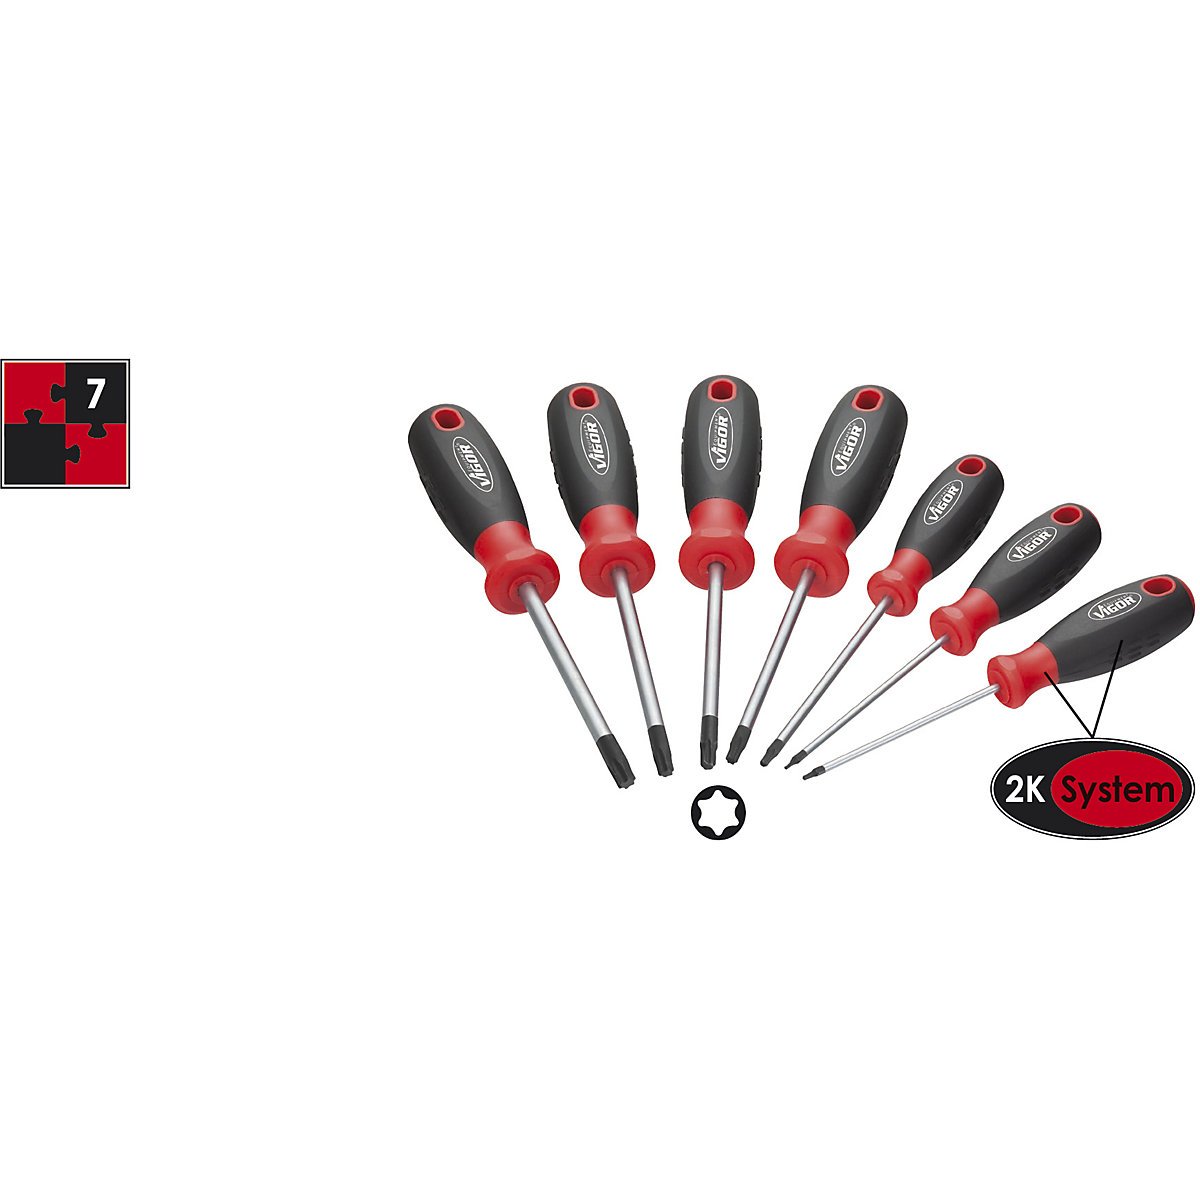 Hexalobular screwdriver set – VIGOR